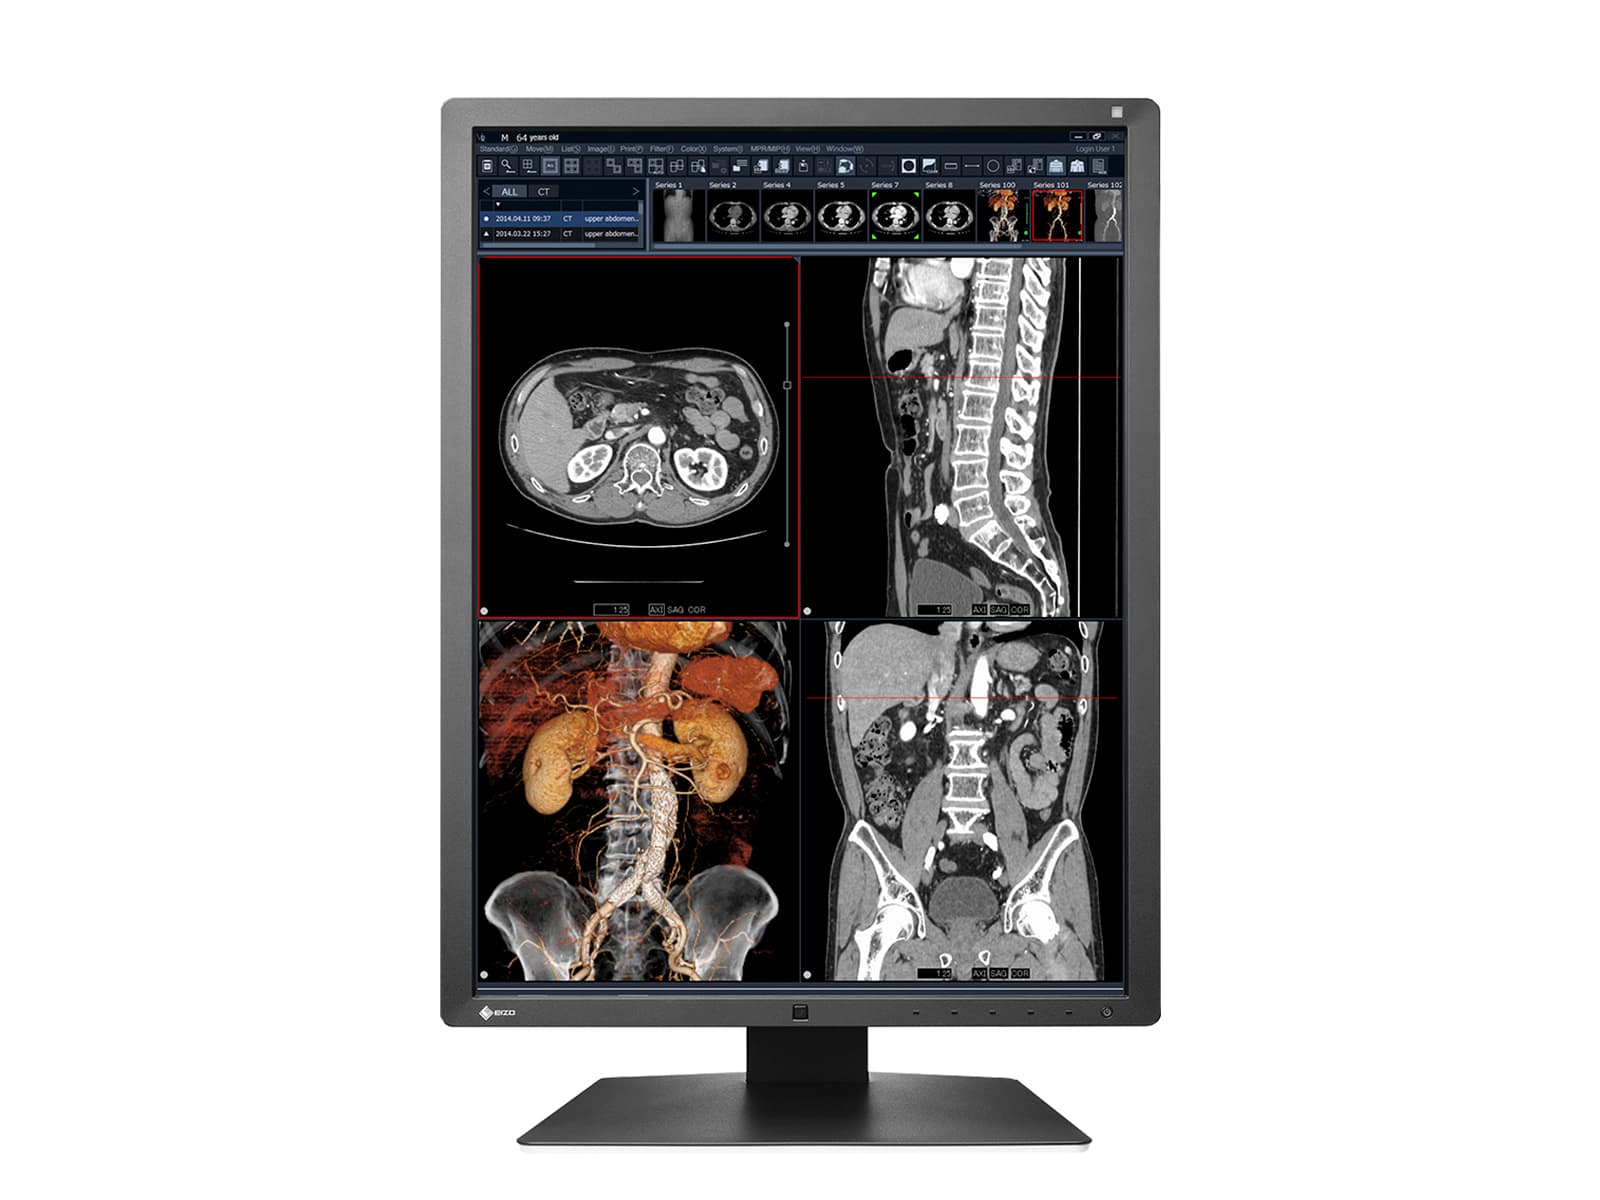 Eizo RadiForce RX250 2MP 21" Farb-LED-Monitor für medizinische Diagnostik und Radiologie (RX250-BK)